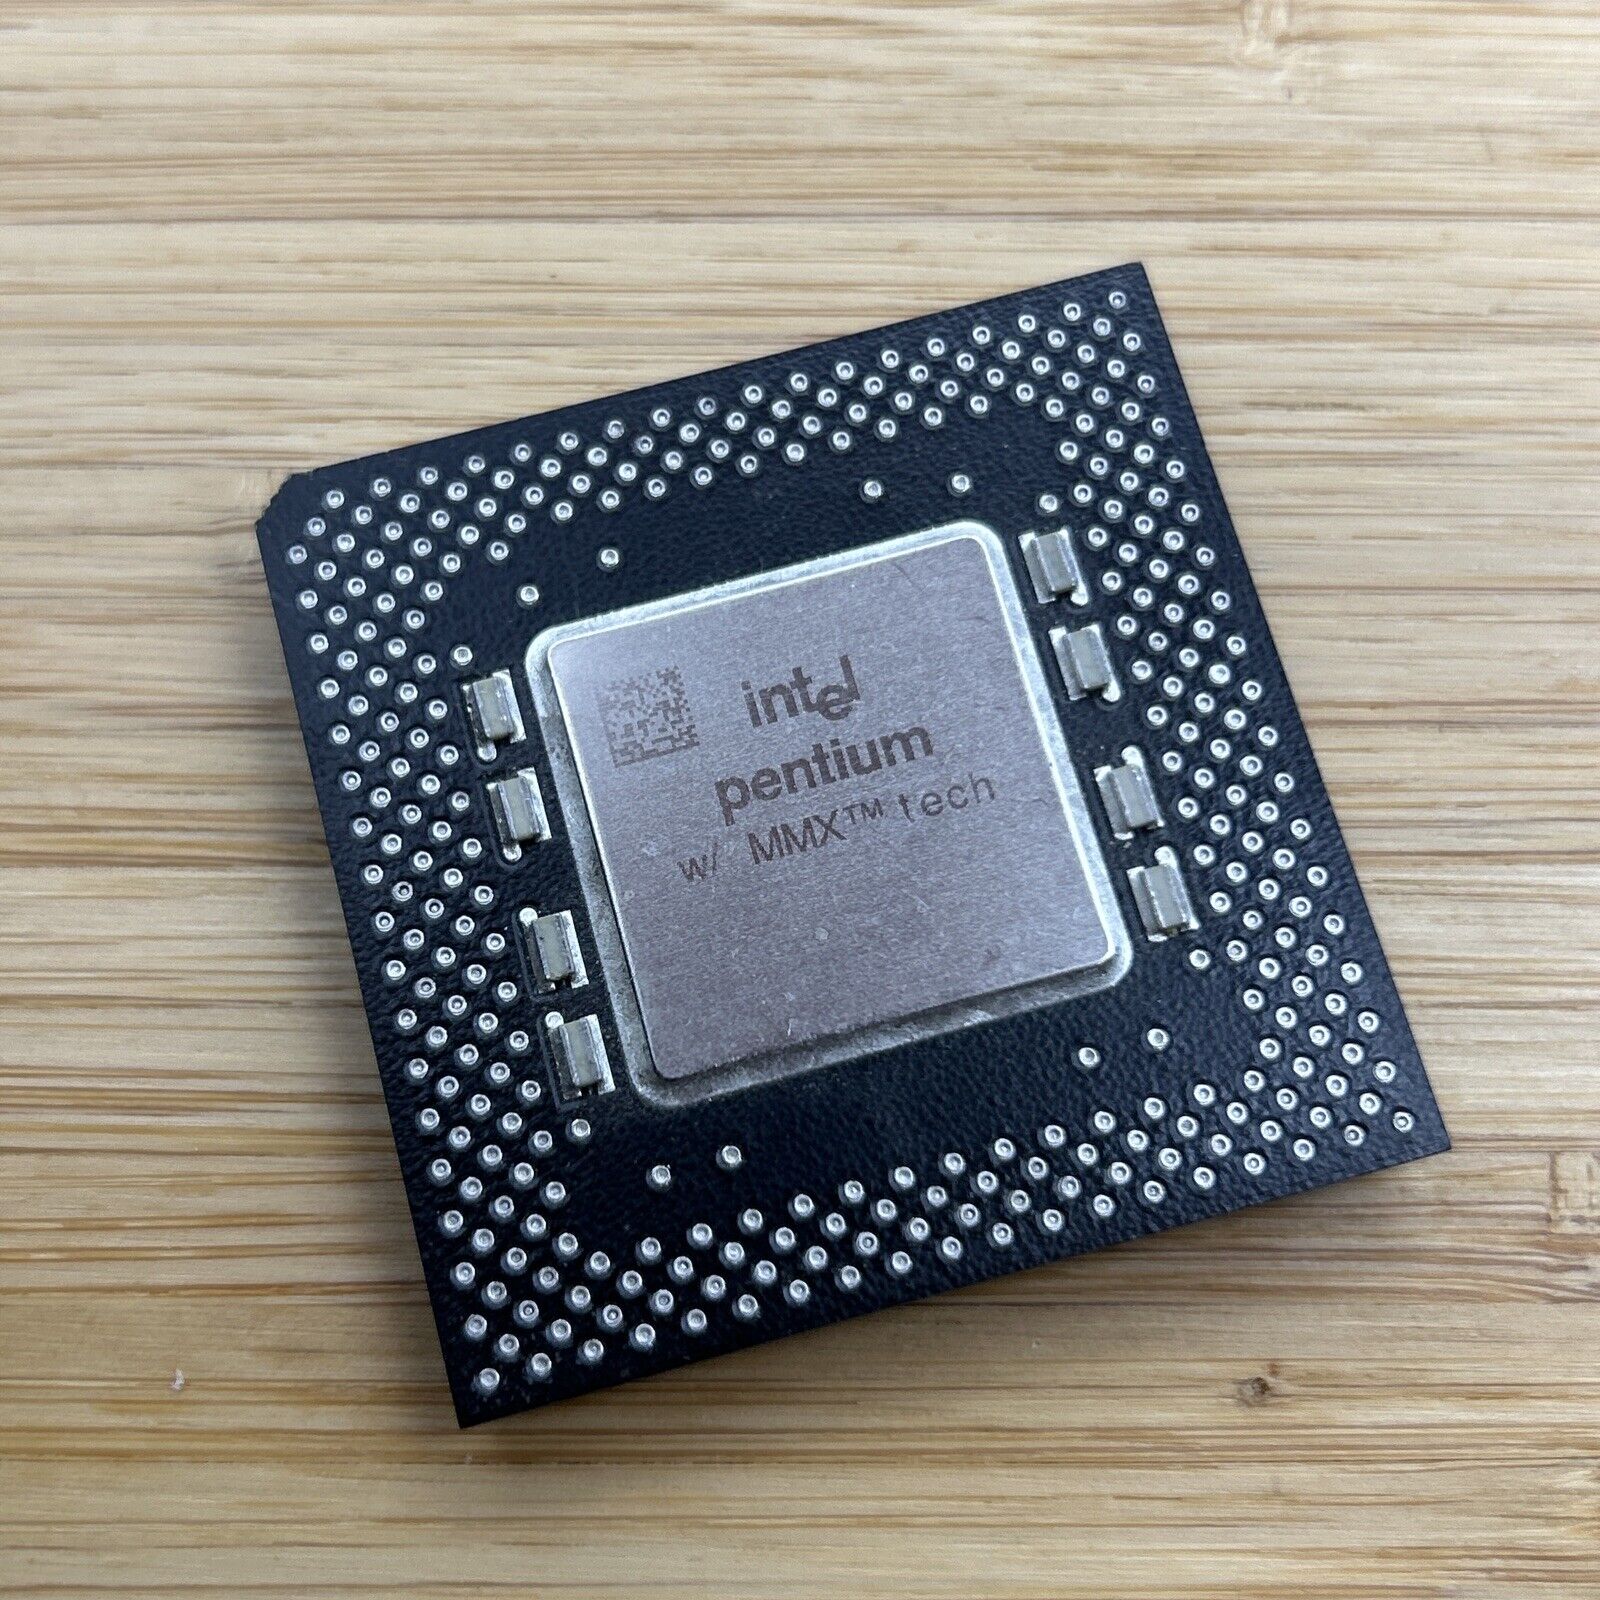 Intel Pentium 233-Mhz MMX CPU SL27S FV80503233 233MMX i233 Socket 7 233mhz